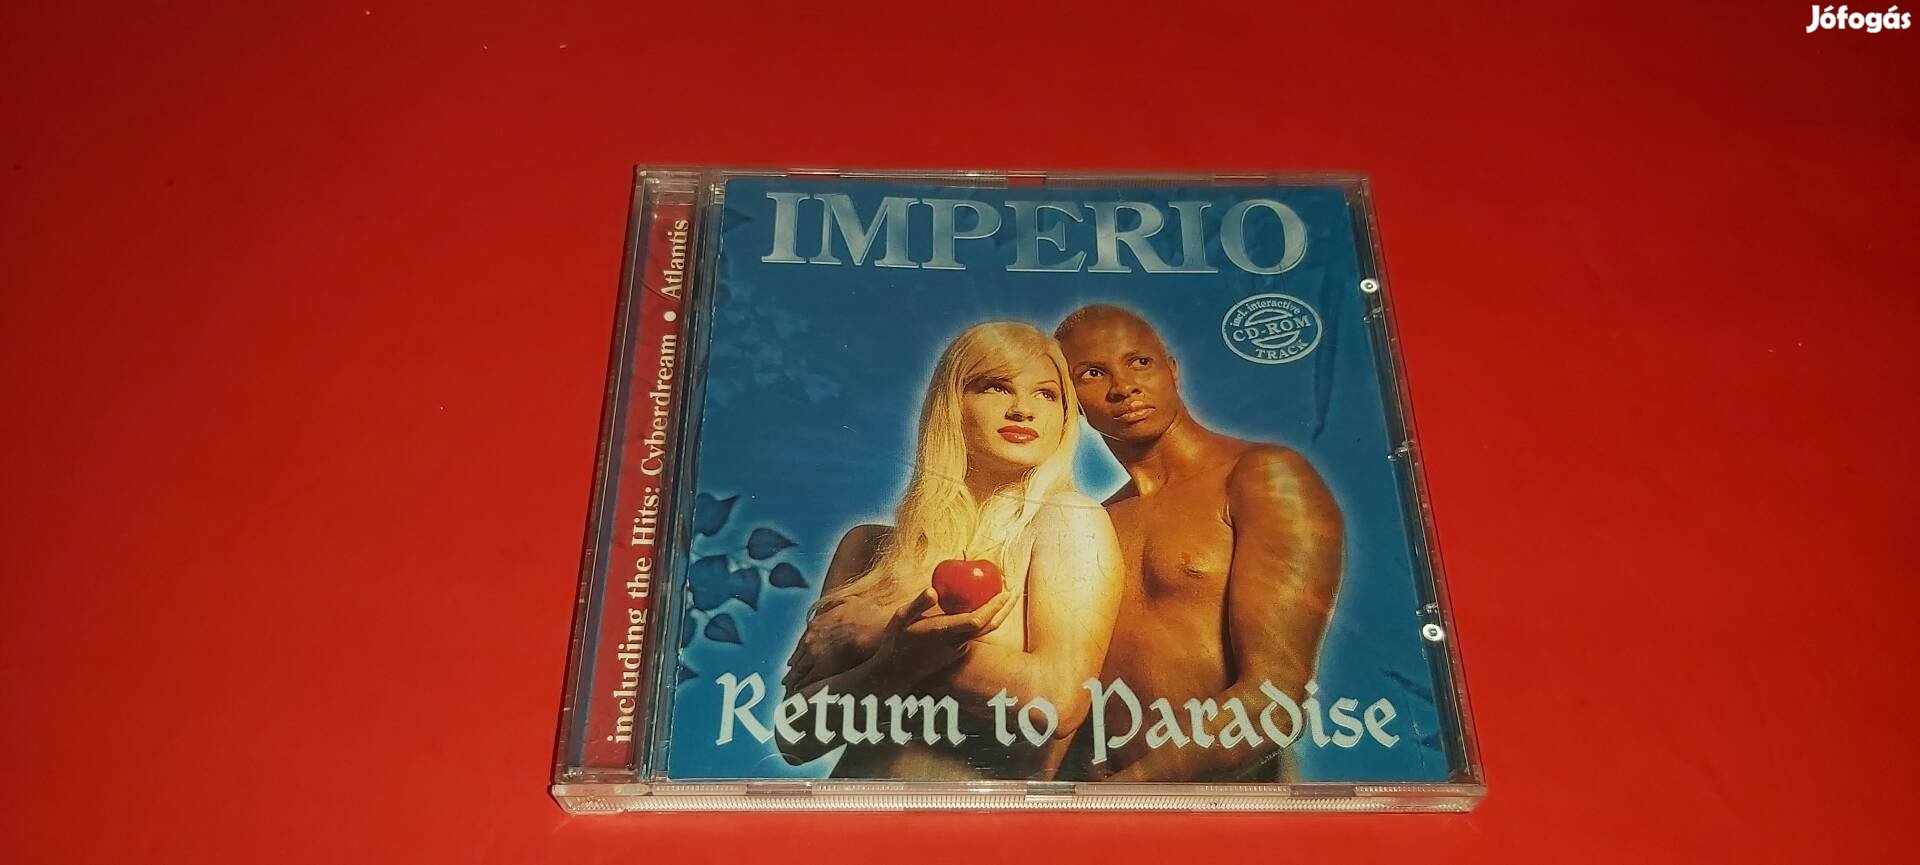 Imperio Return to paradise Cd 1996